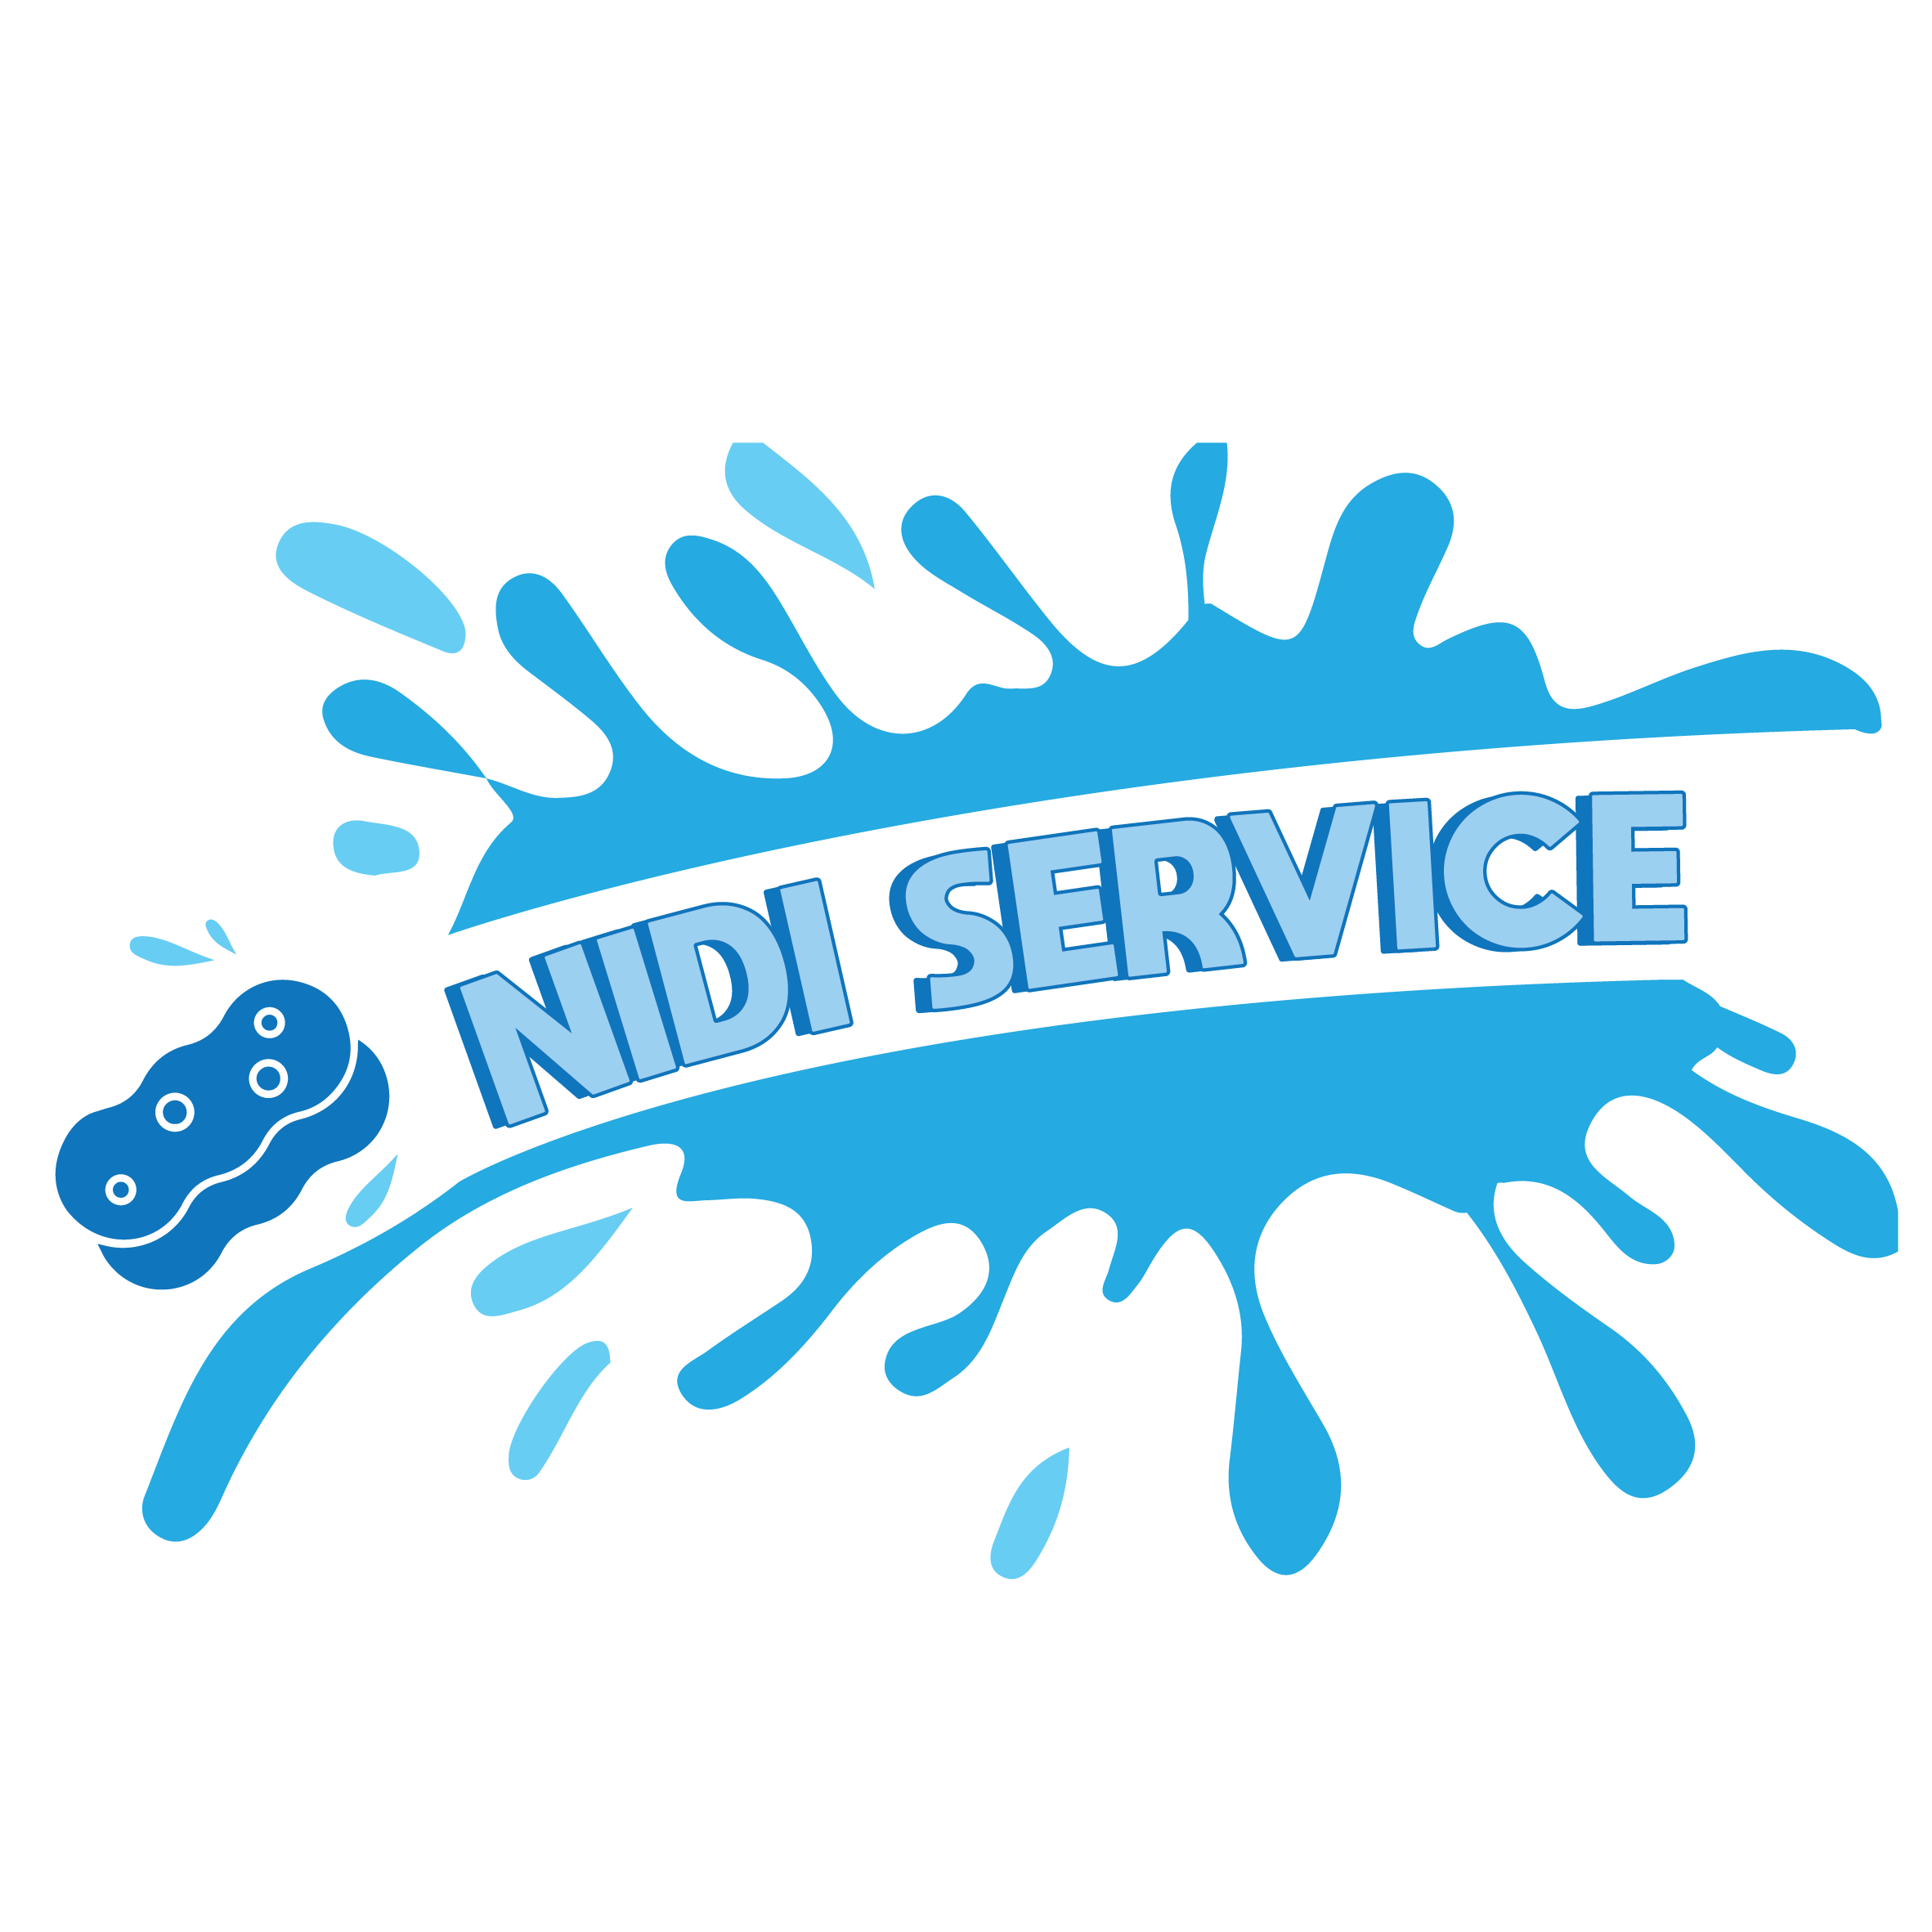 NiDi service